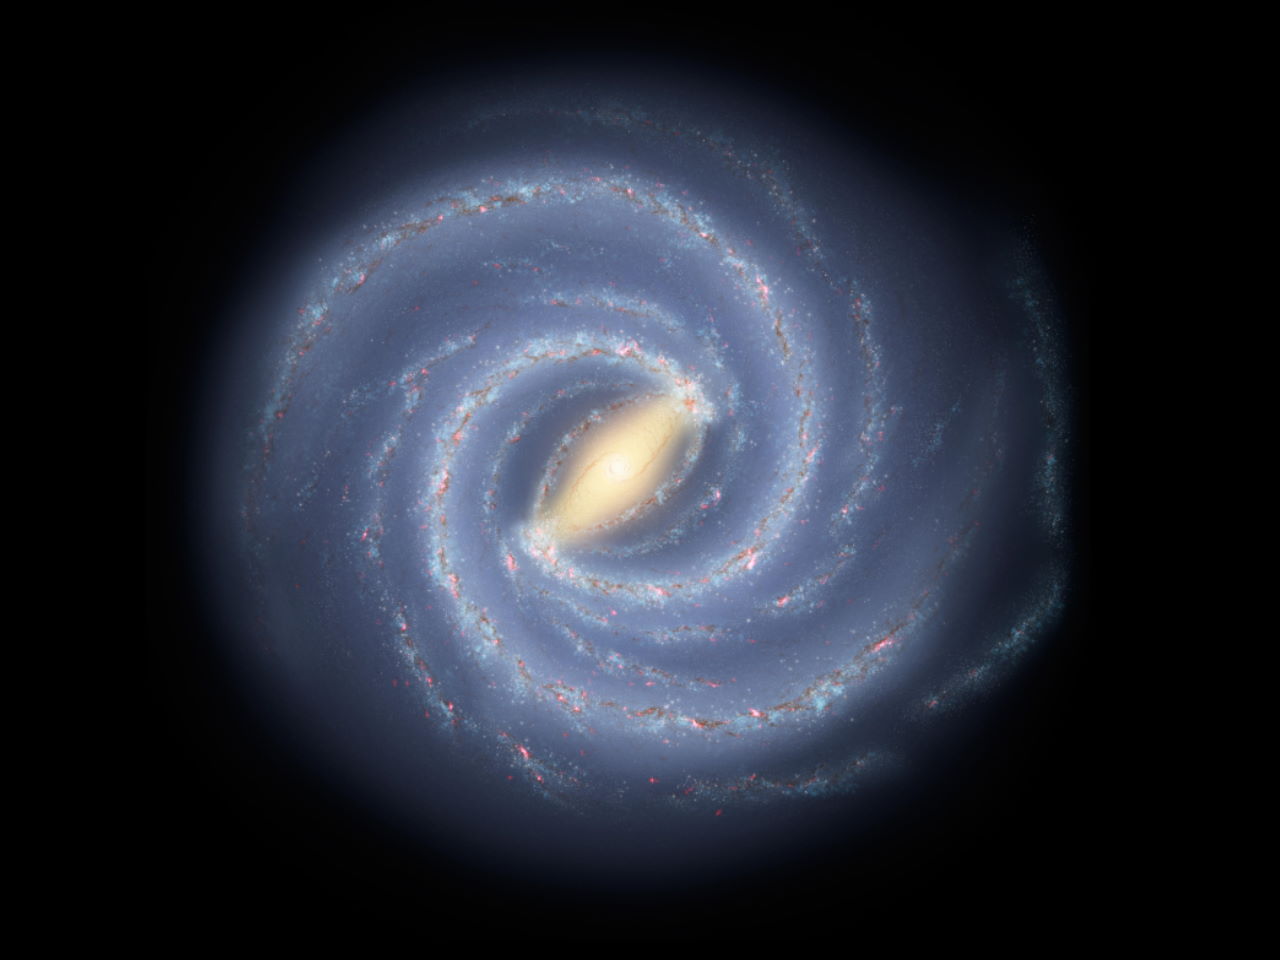 Художнє зображення Чумацького Шляху, якщо дивитися на галактику згори.&amp;nbsp;NASA / JPL-Caltech / R. Hurt SSC / Caltech